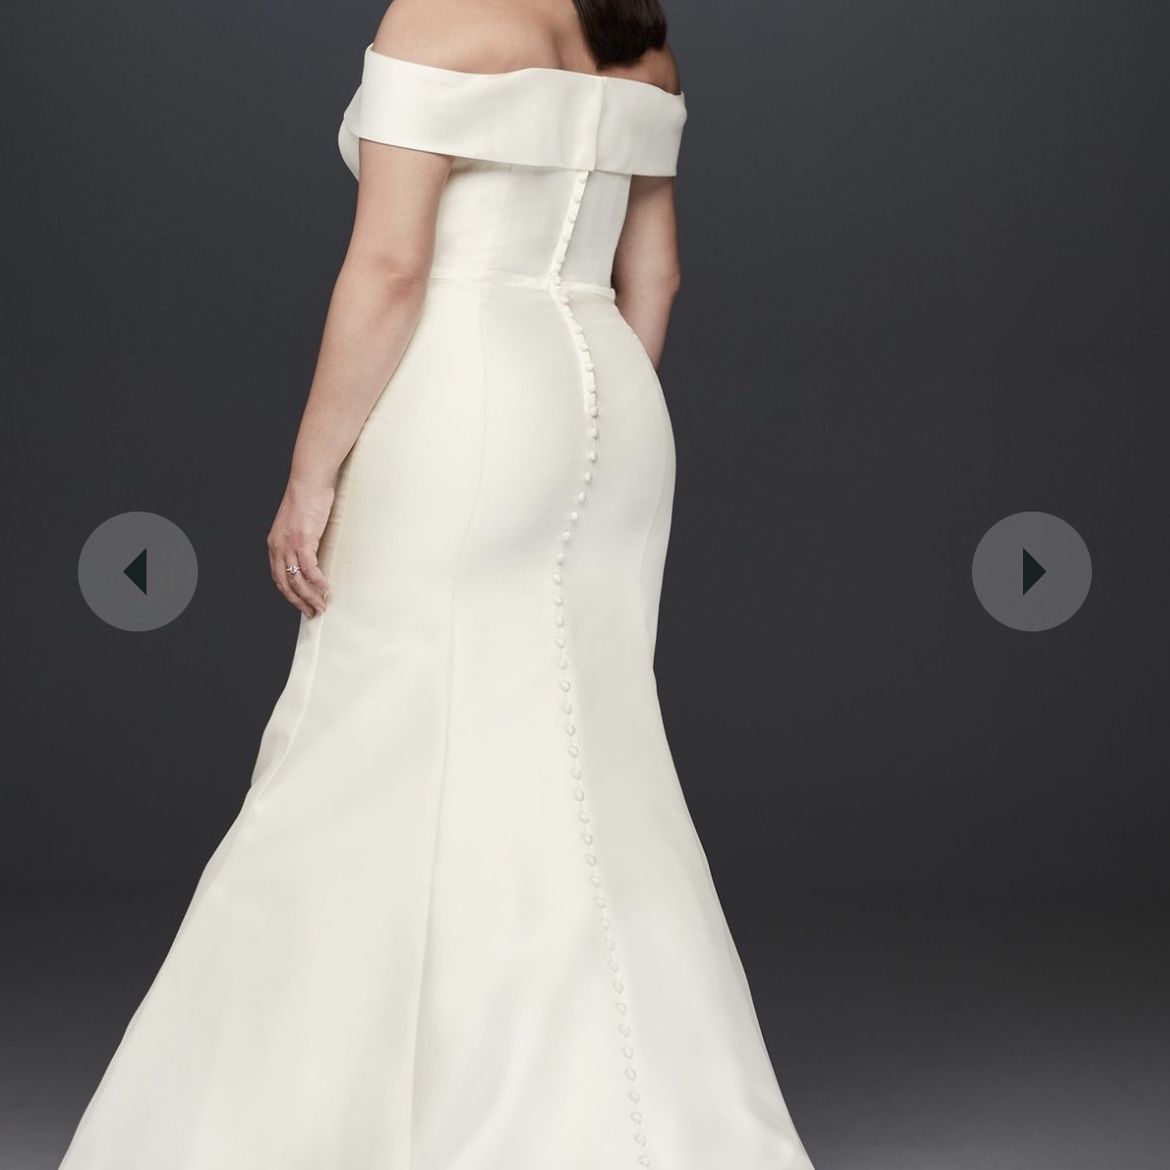 Simple Elegant Wedding Dress